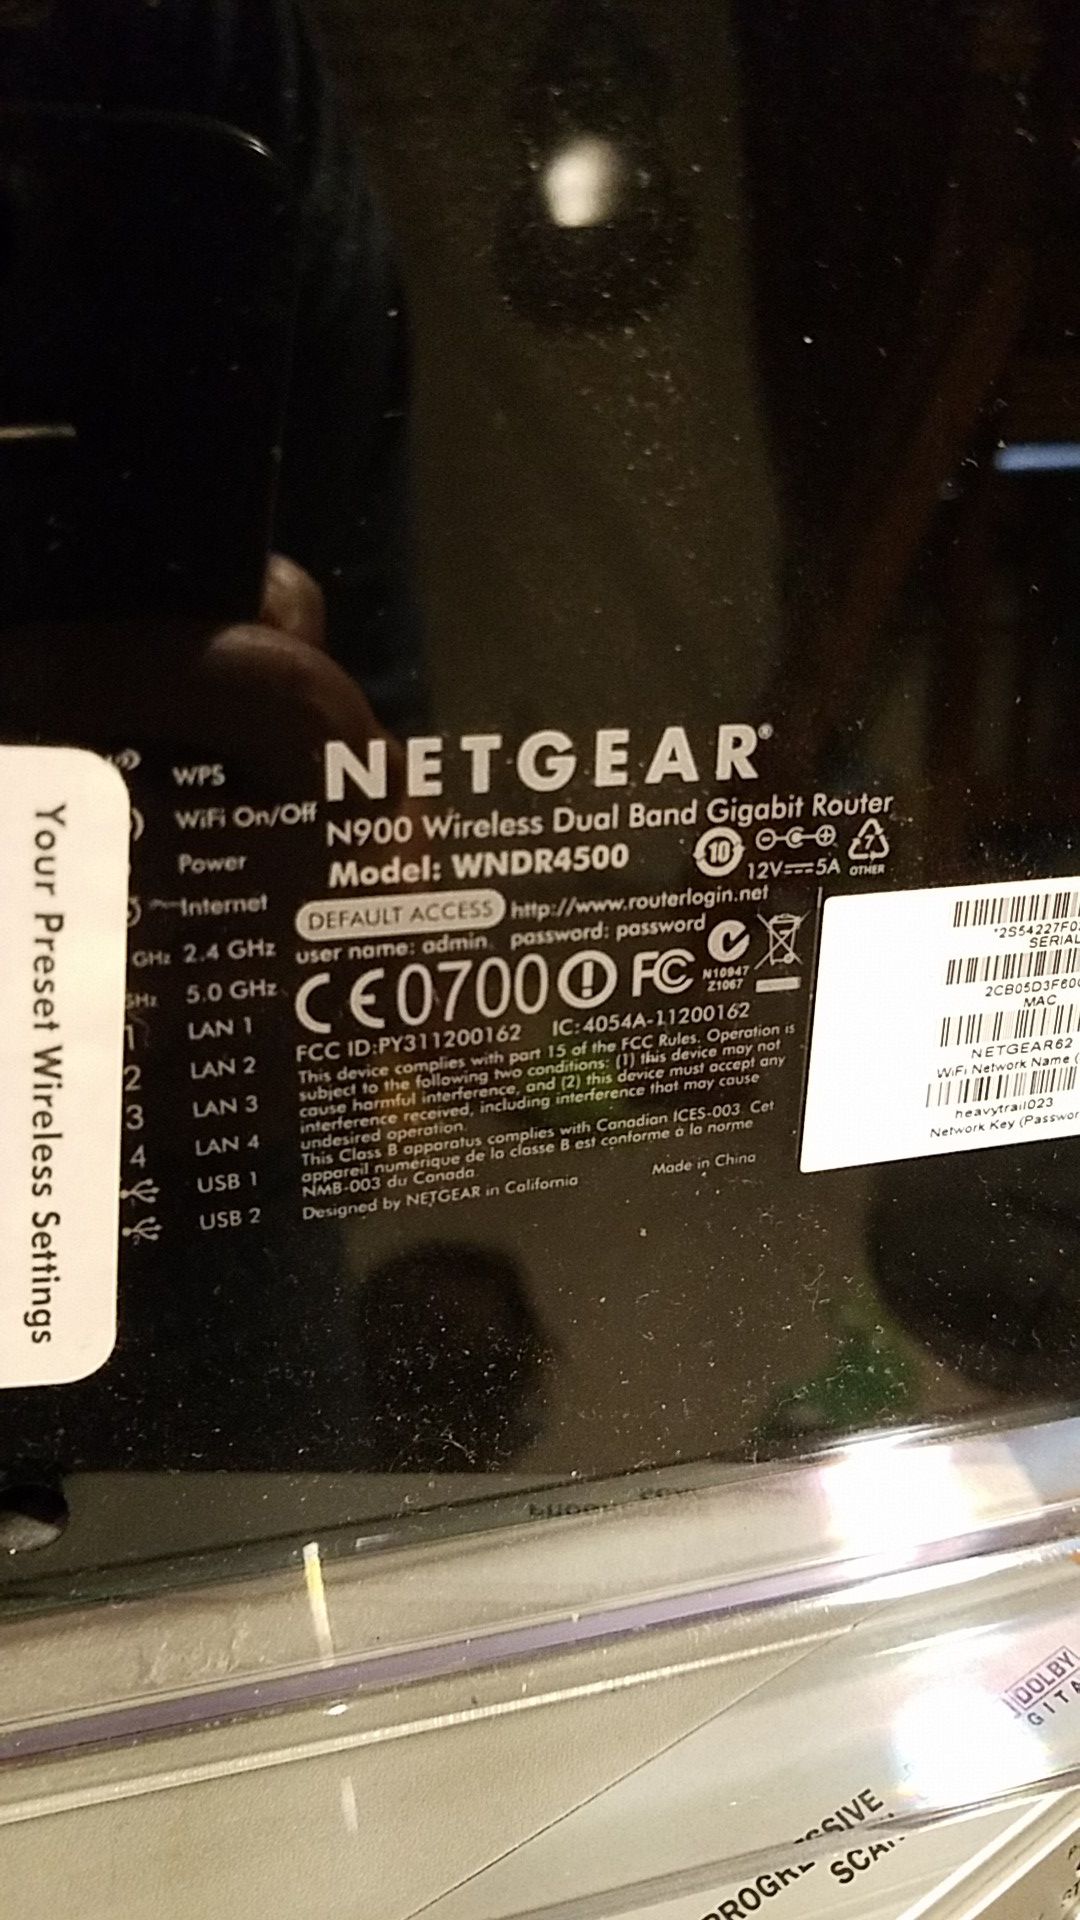 Netgear N900 wireless dual band router